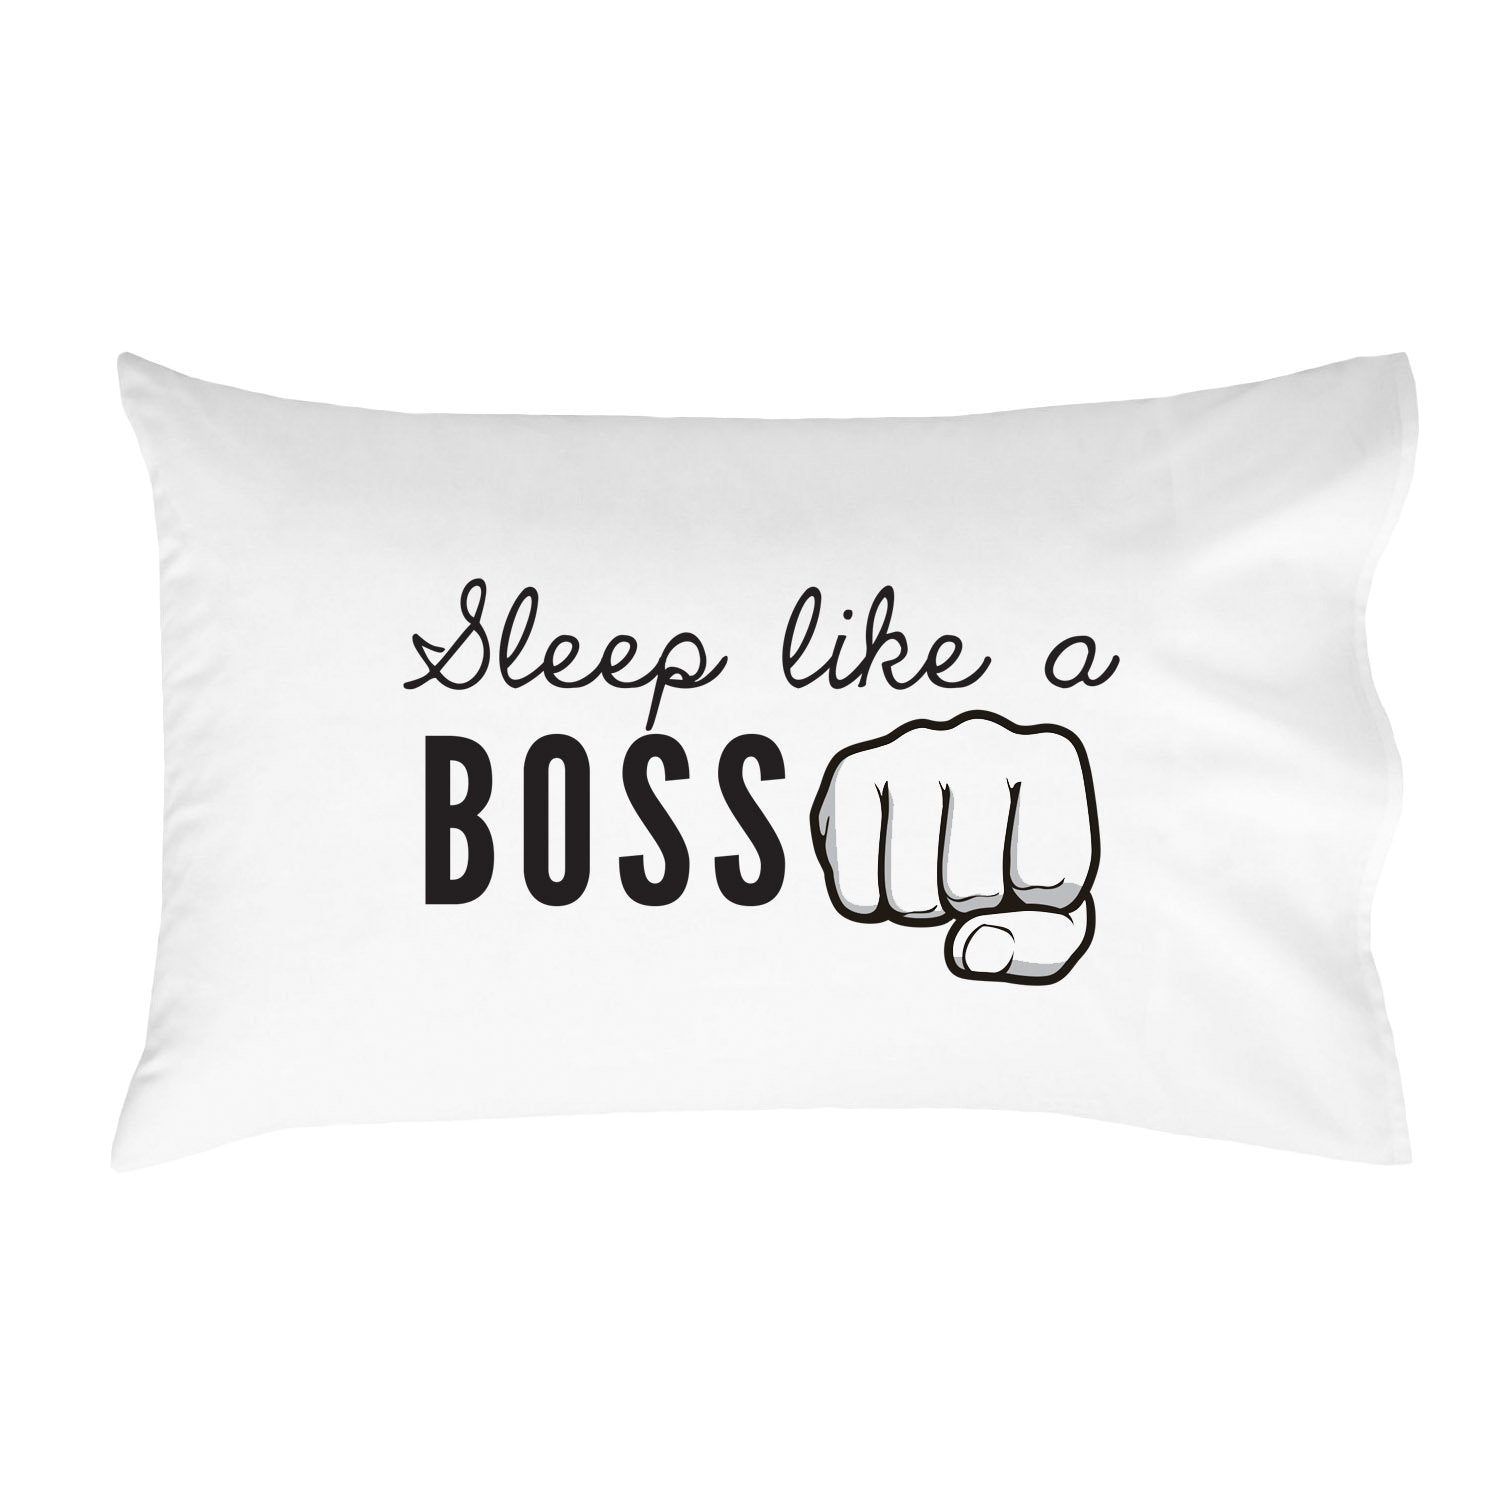 Sleep Like A Boss Pillowcase (One 20x30 Standard/Queen Size Pillow Case) Bedroom Decor Dorm Room Accessories